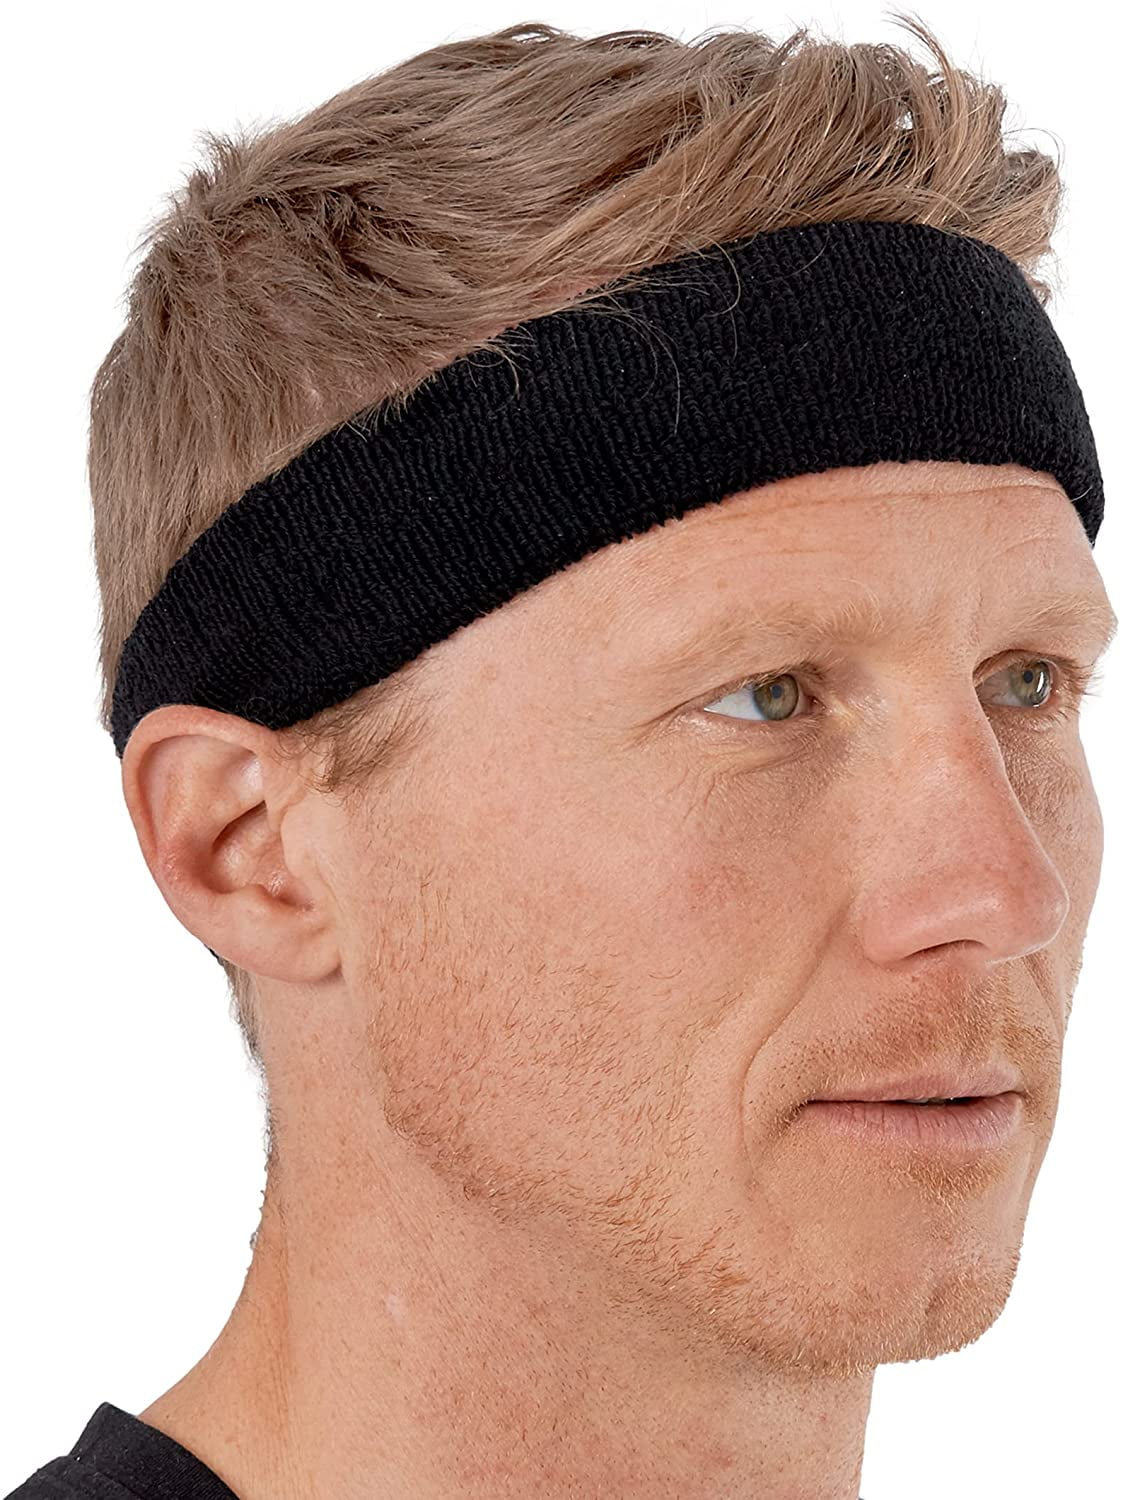 terry cloth cotton stripe headband basketball running yoga gym sports sweatband 